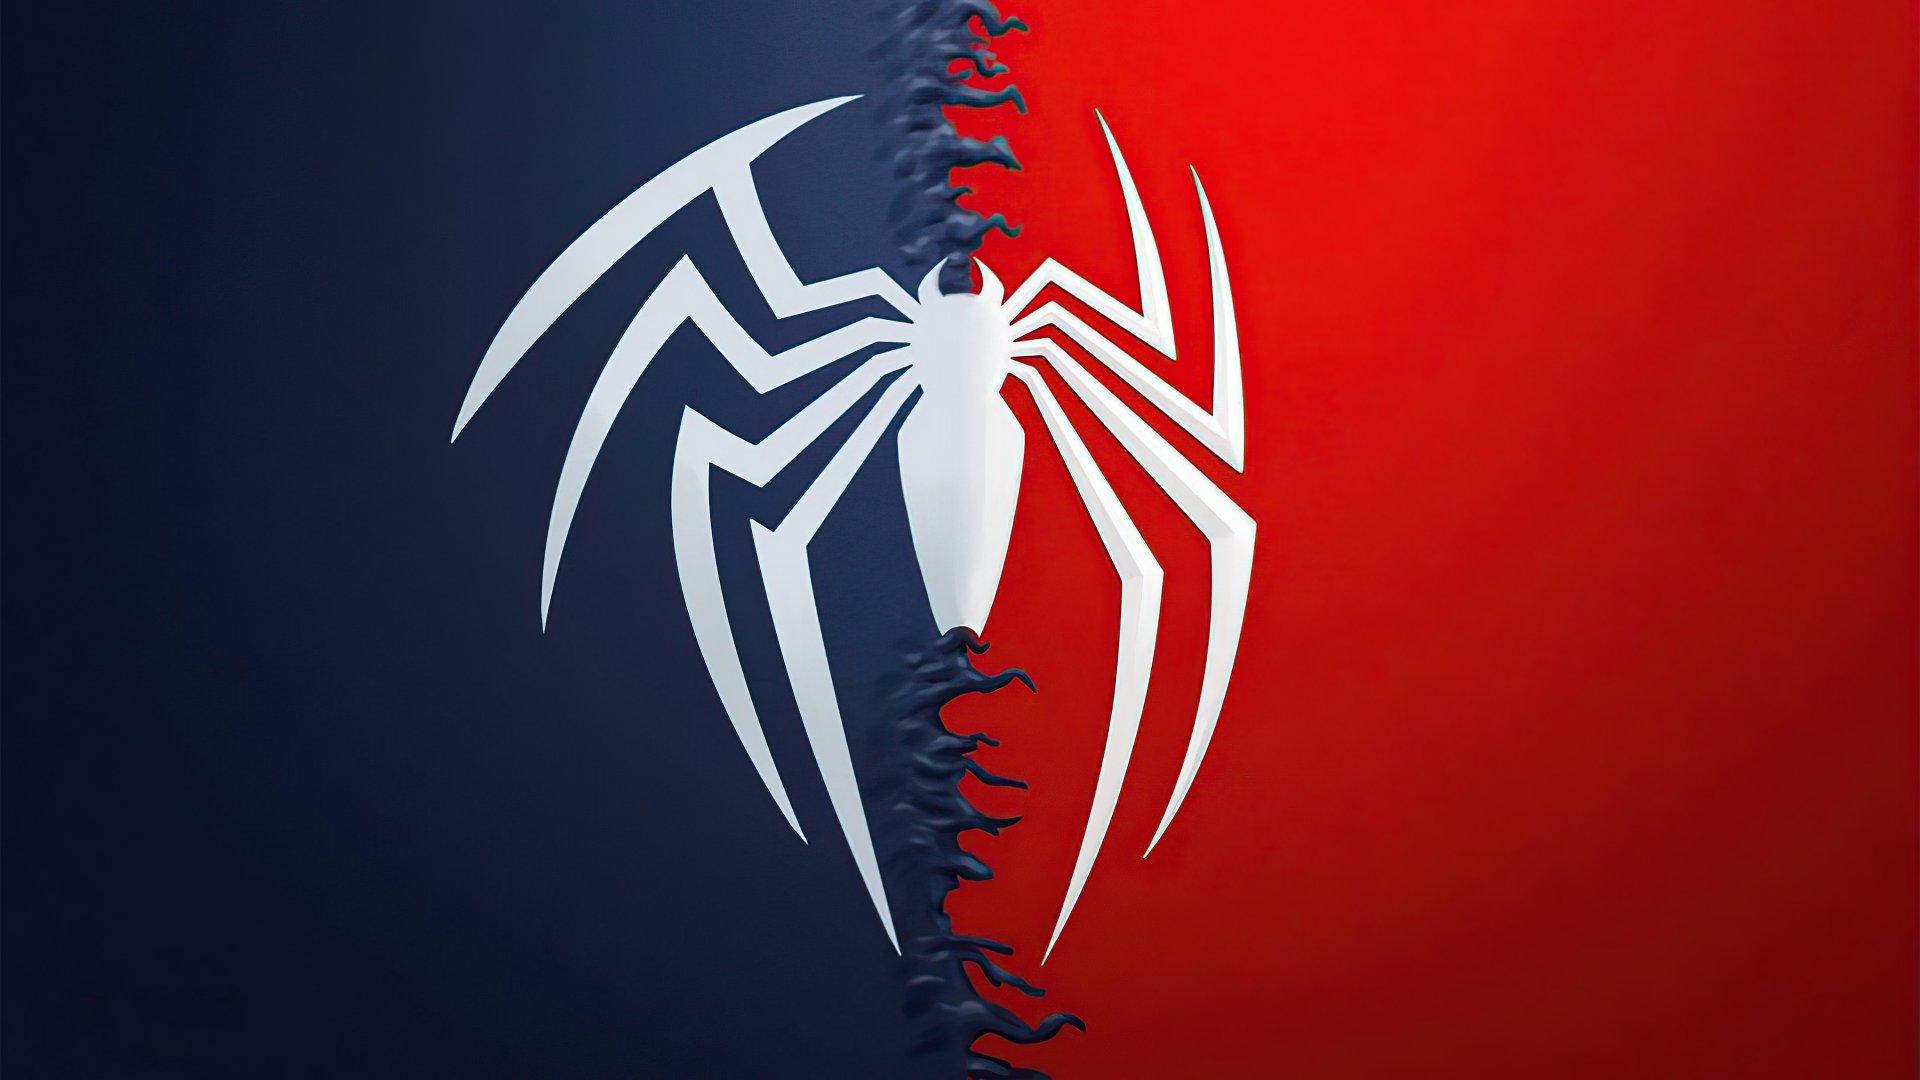 SpiderMan logo 1080P 2K 4K 5K HD wallpapers free download  Wallpaper  Flare